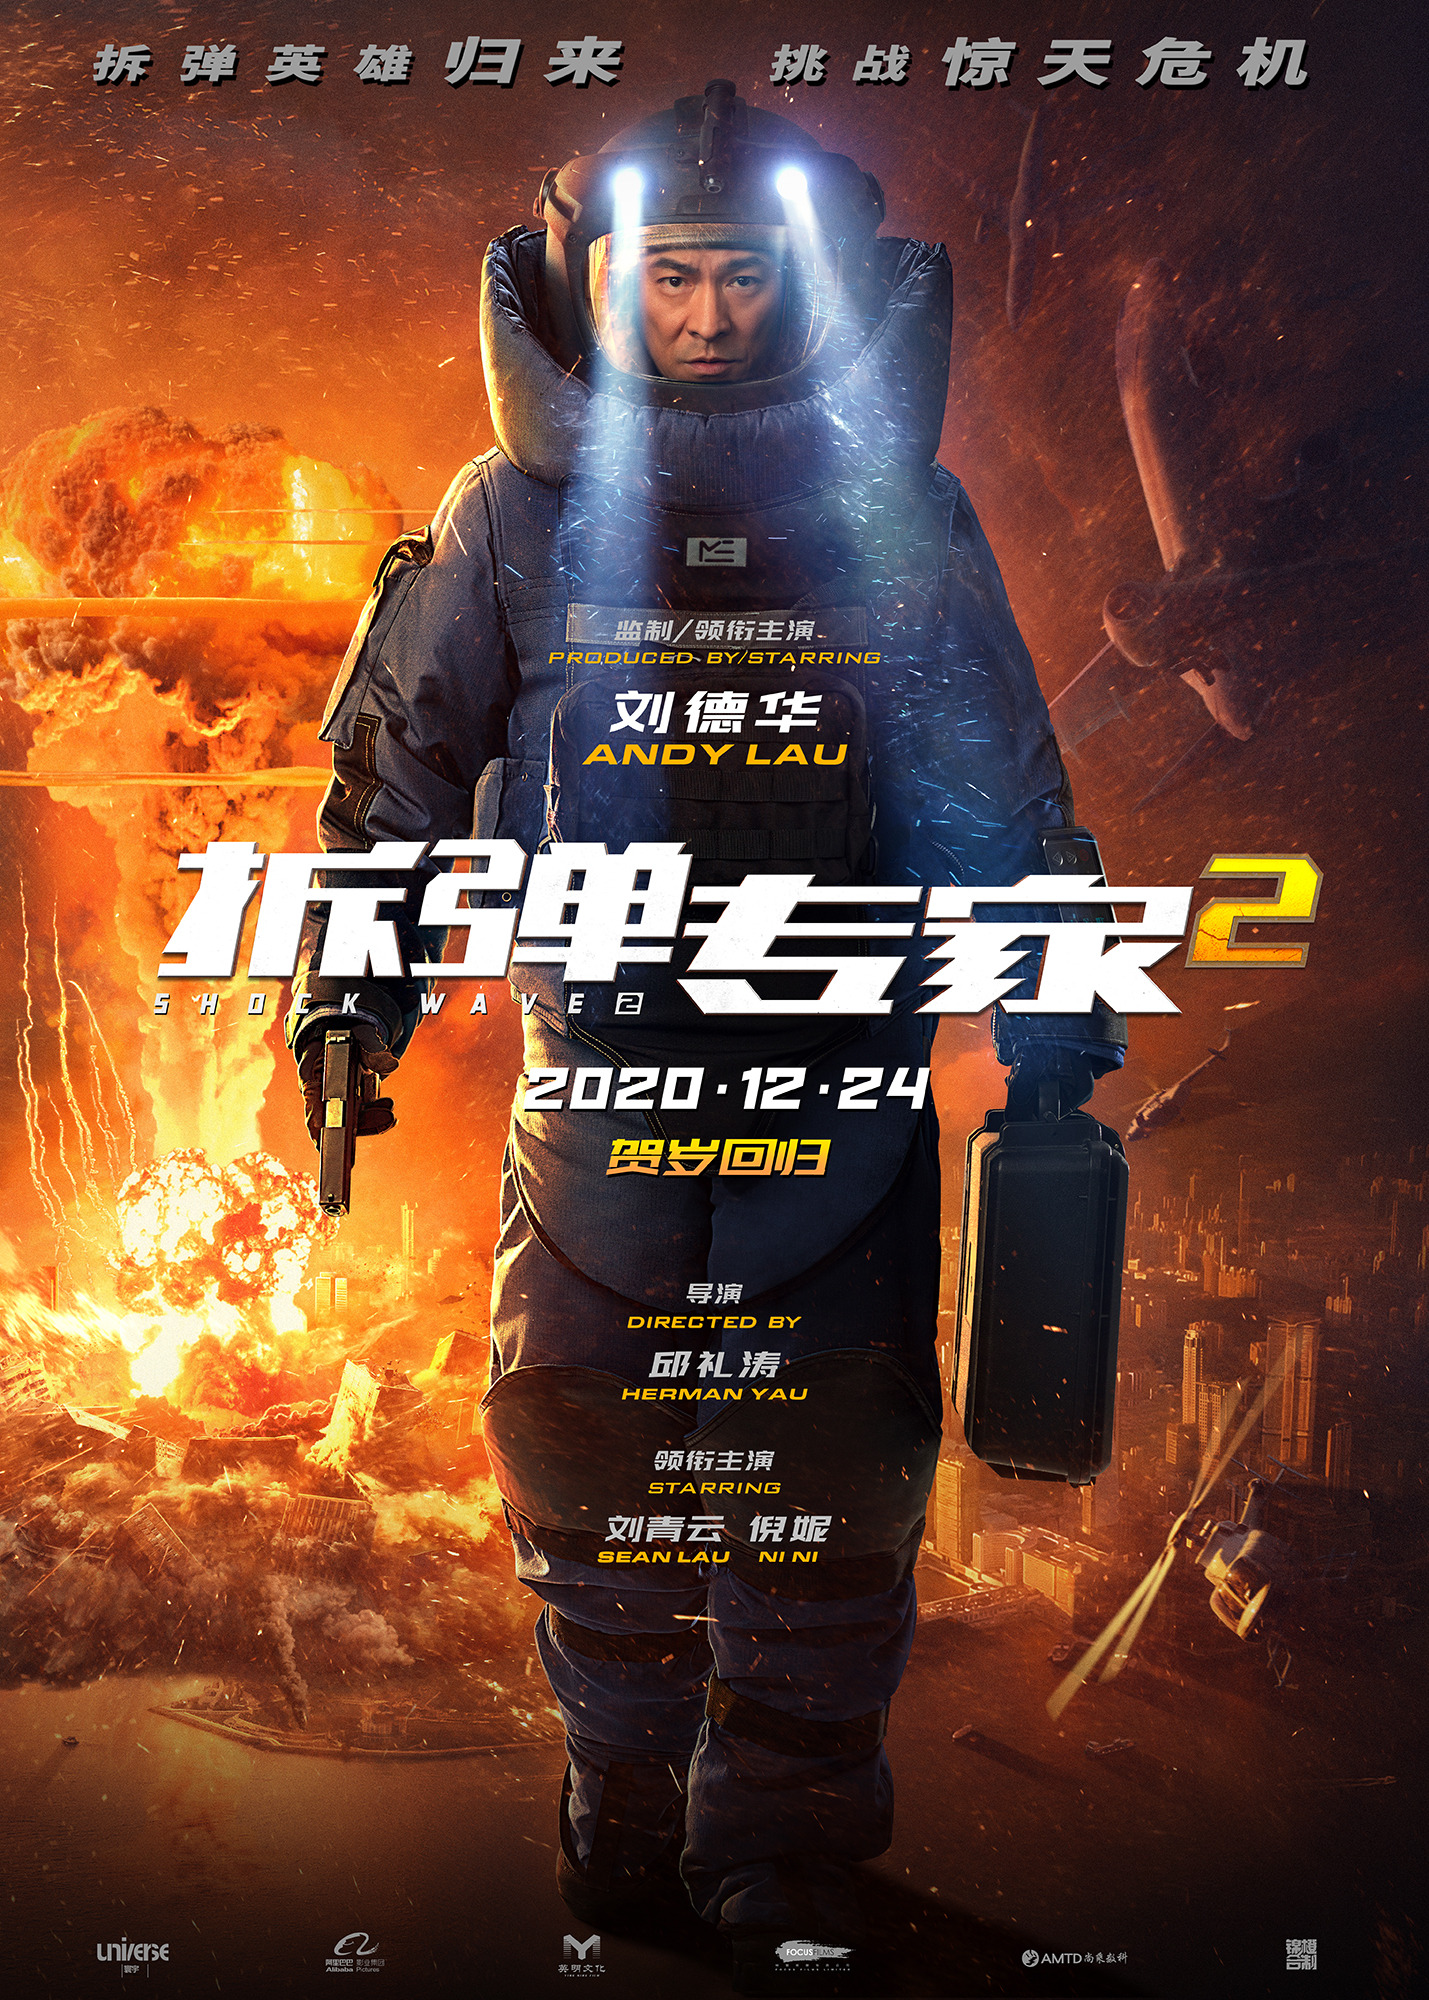 Mega Sized Movie Poster Image for Shock Wave 2 (#1 of 7)